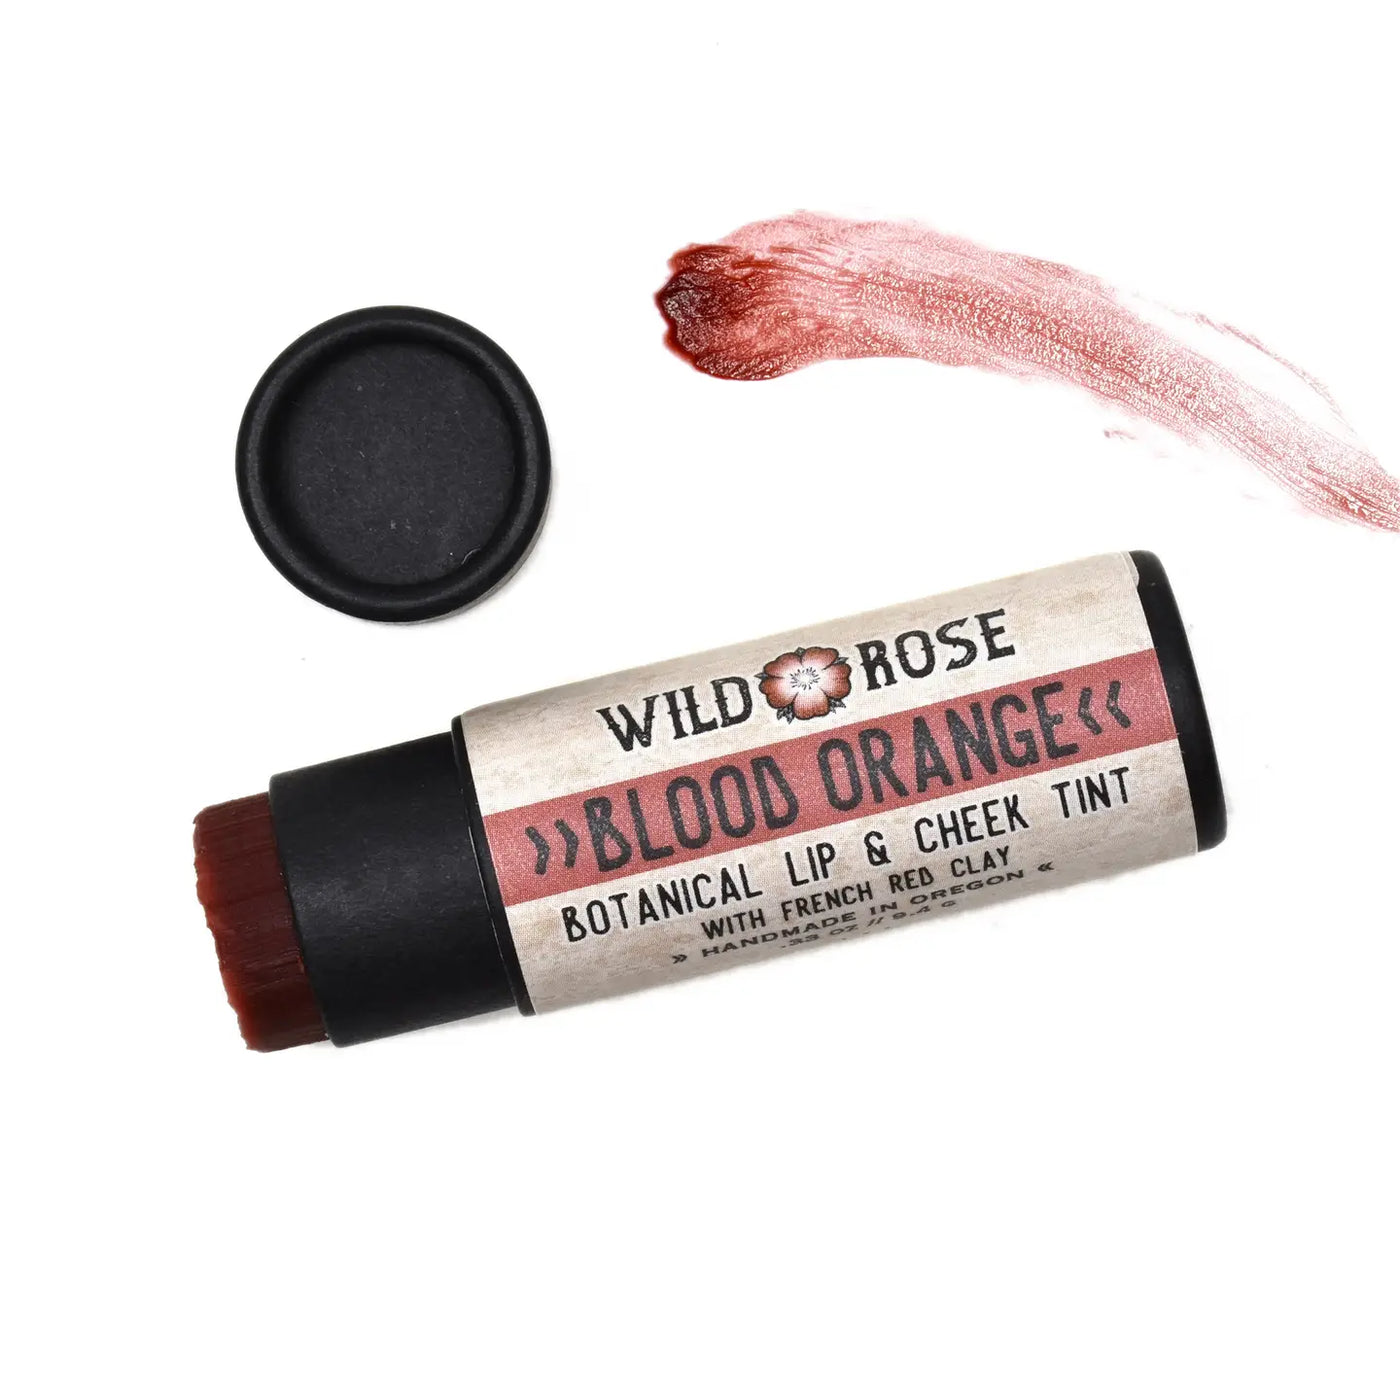 Wild Rose Herbs Botanical Lip & Cheek Tints